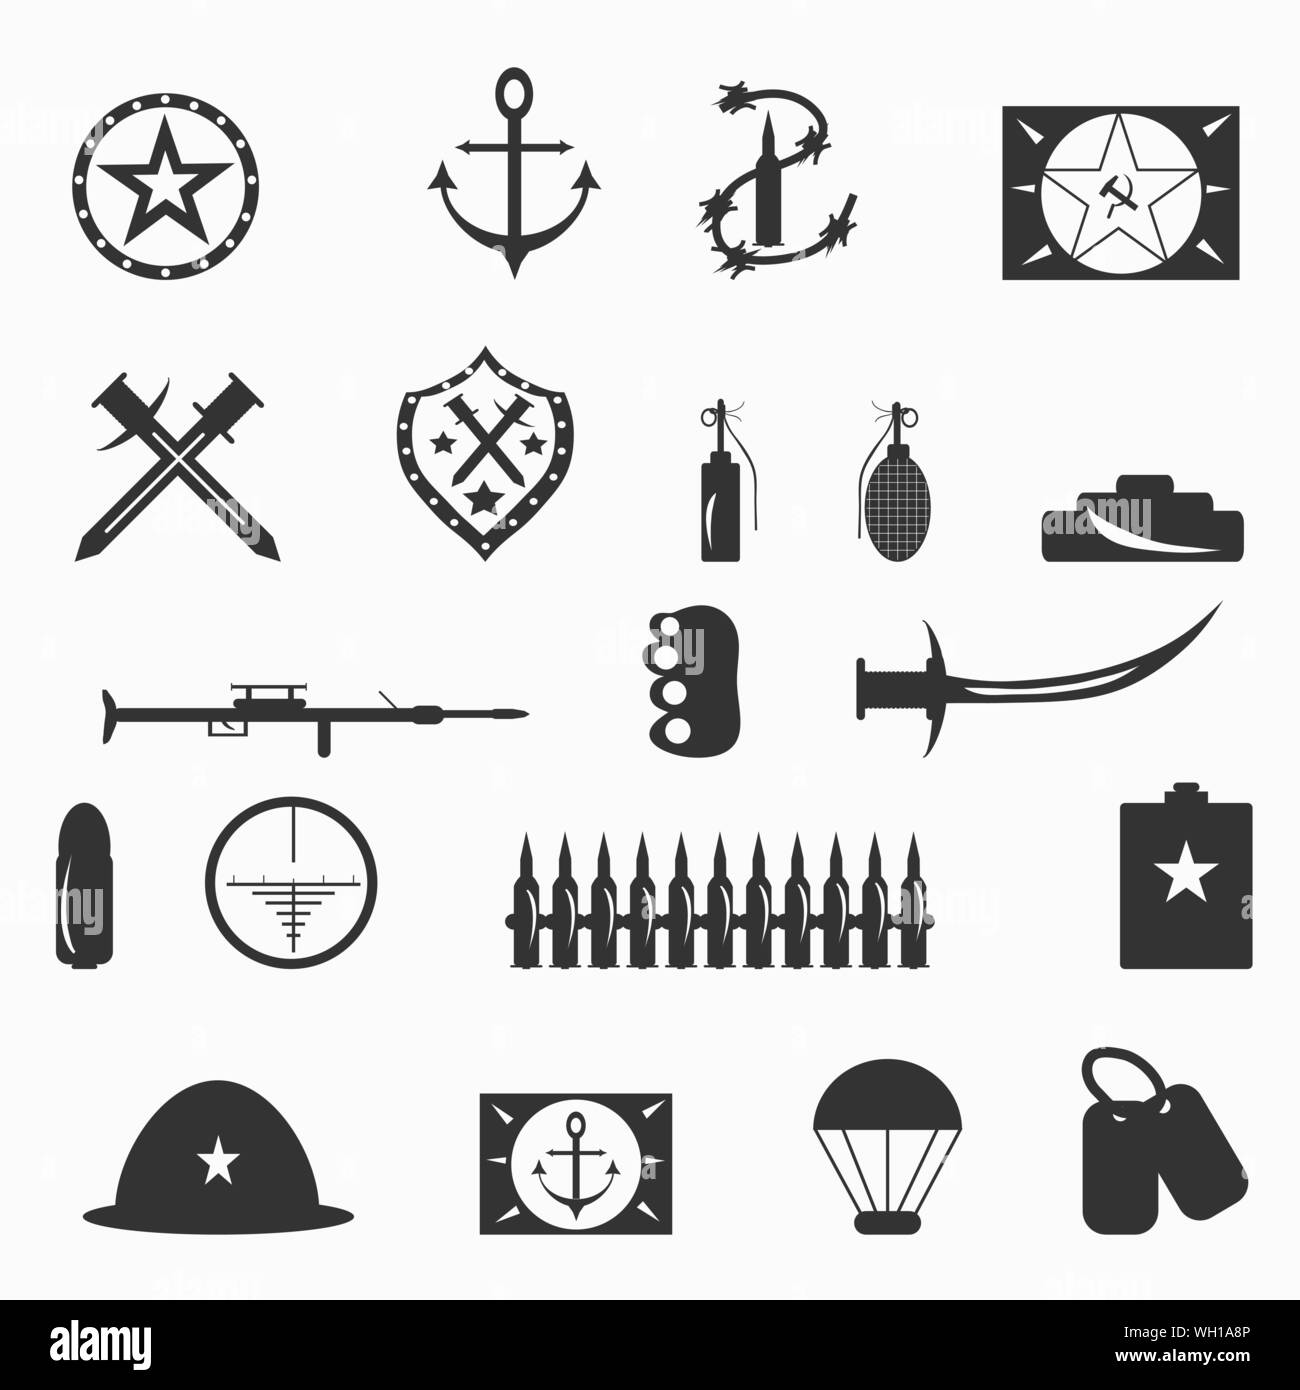 military graphics and symbols